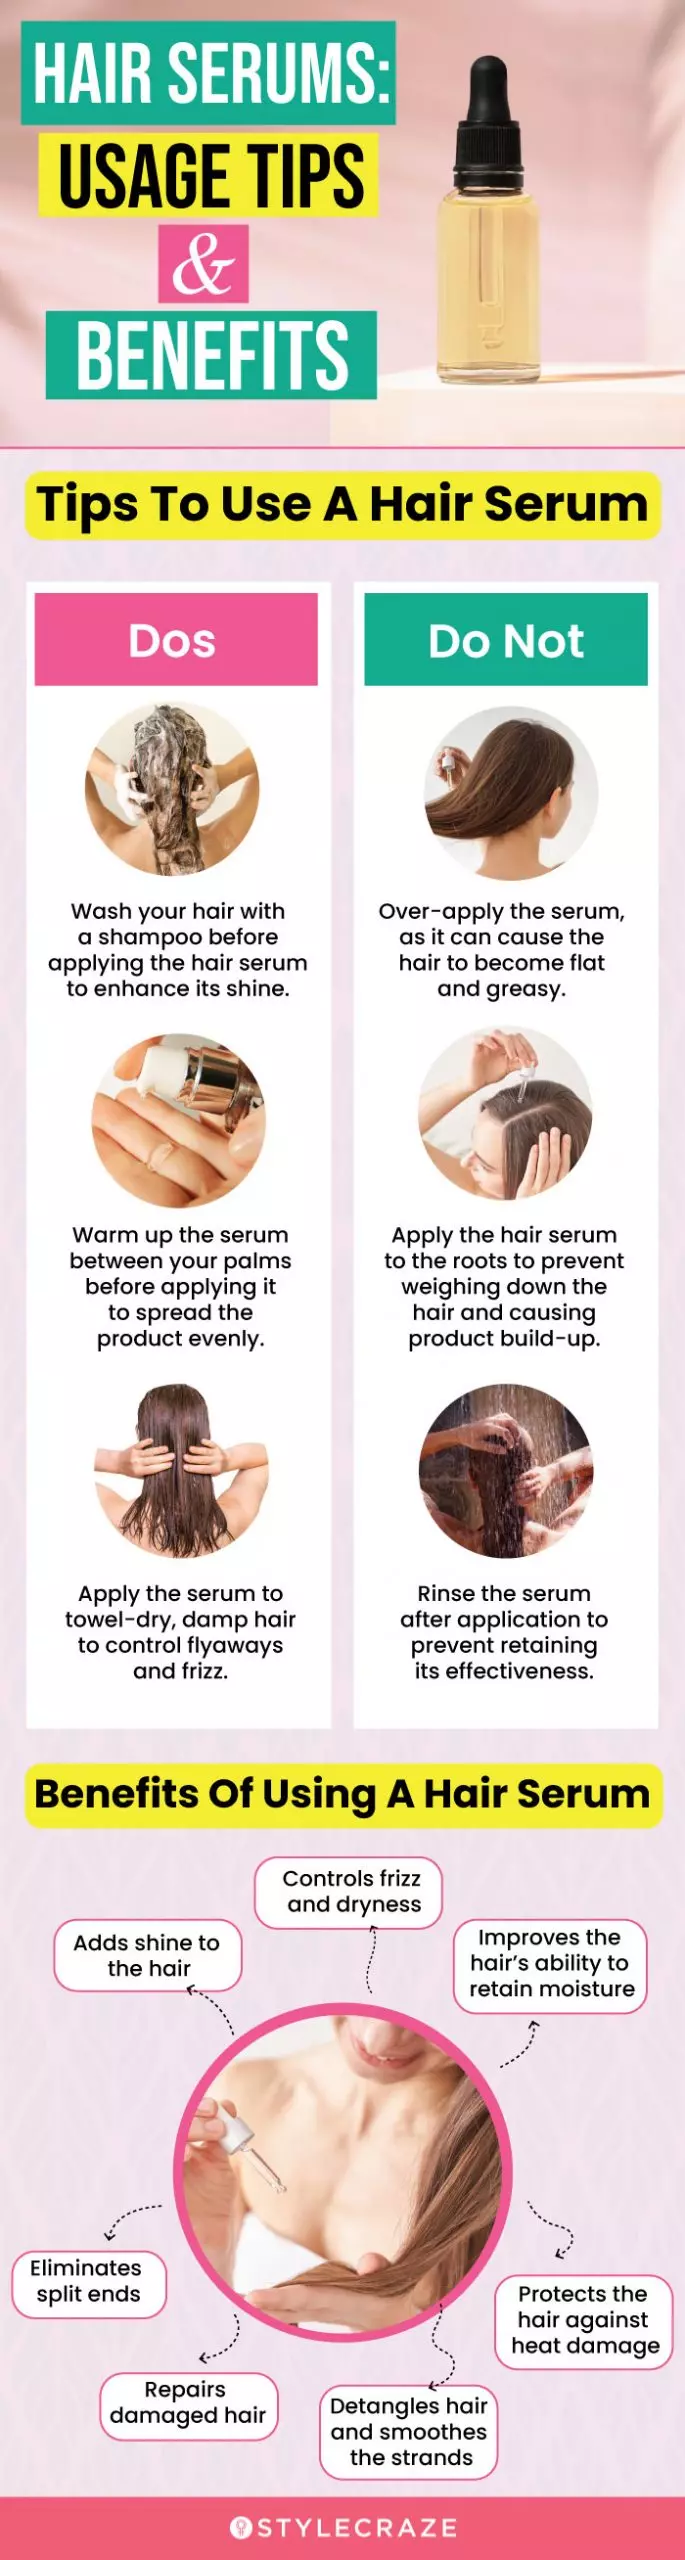 Hair Serum Usage Tips & Benefits (infographic)